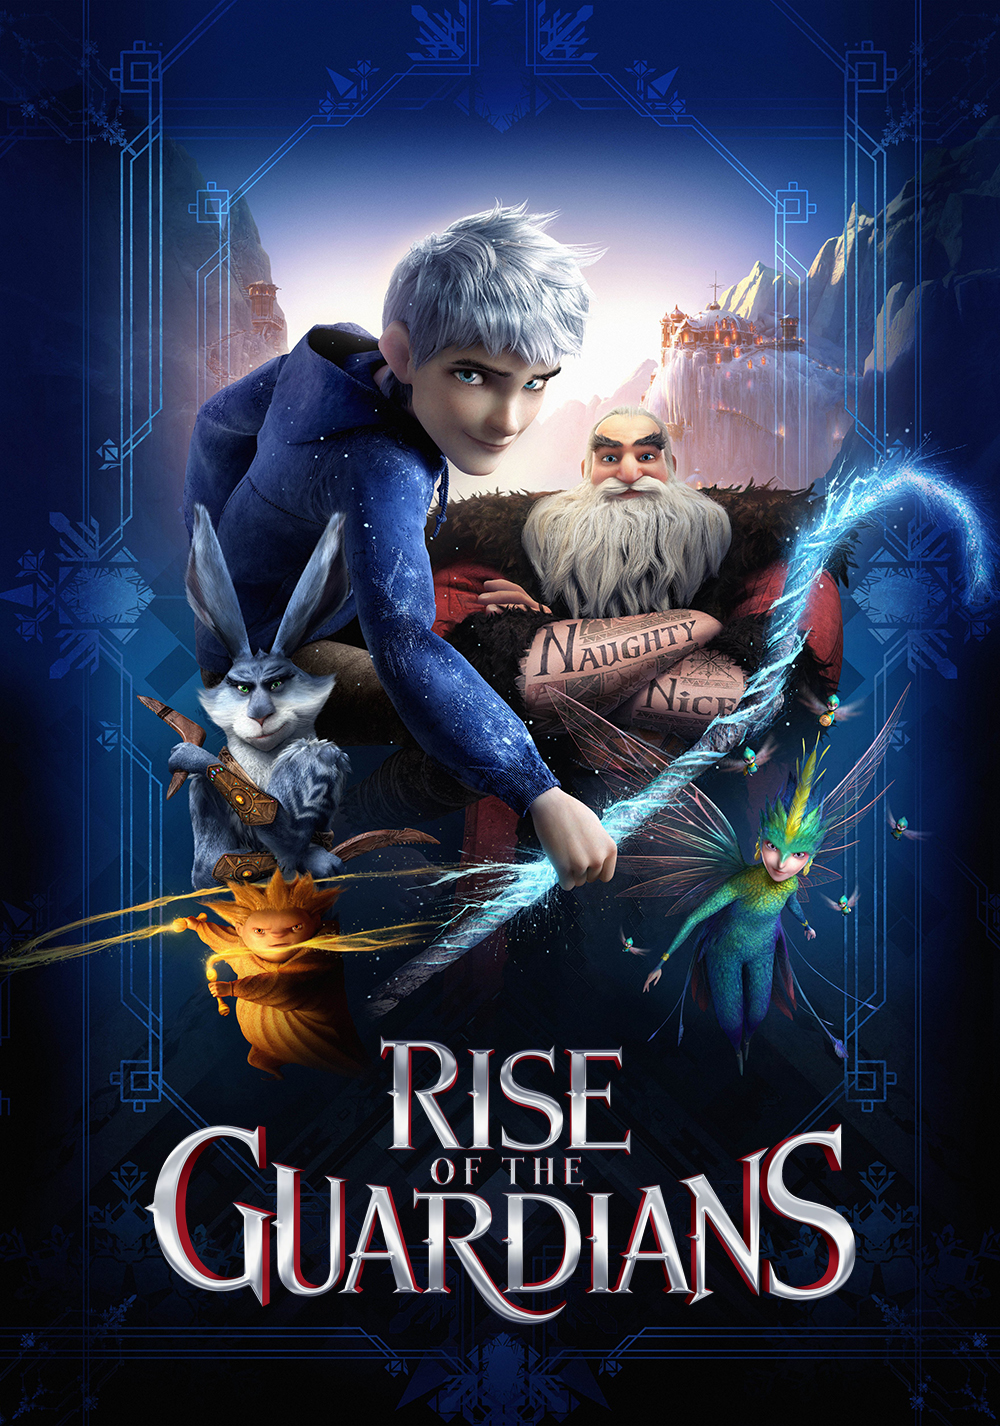 Rise of the guardians full movie free download utorrent psicose 3 download legendado torrent